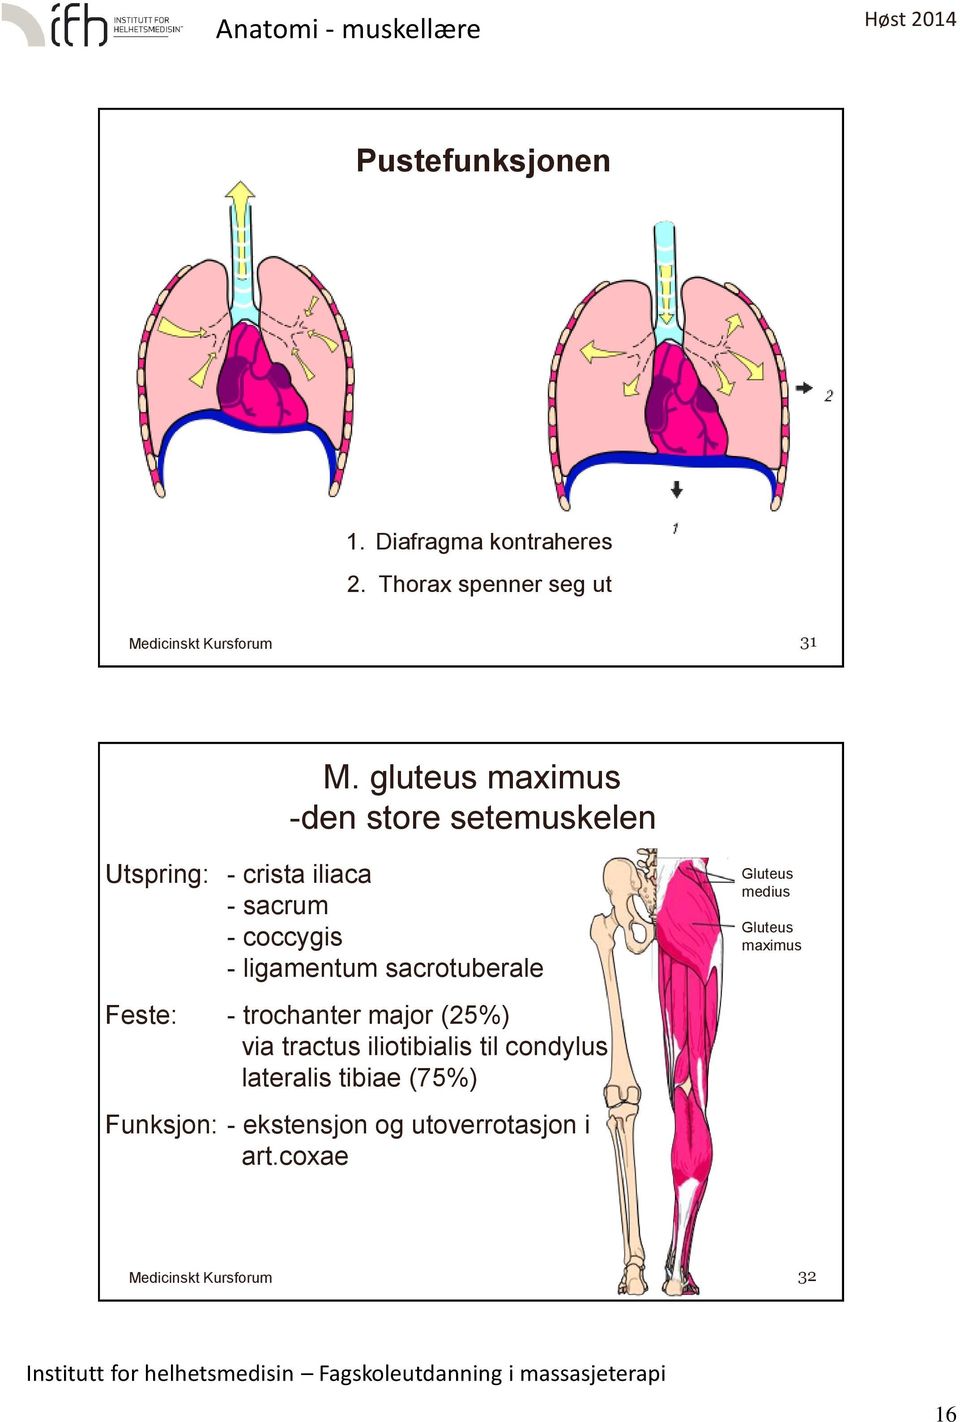 ligamentum sacrotuberale - trochanter major (25%) via tractus iliotibialis til condylus